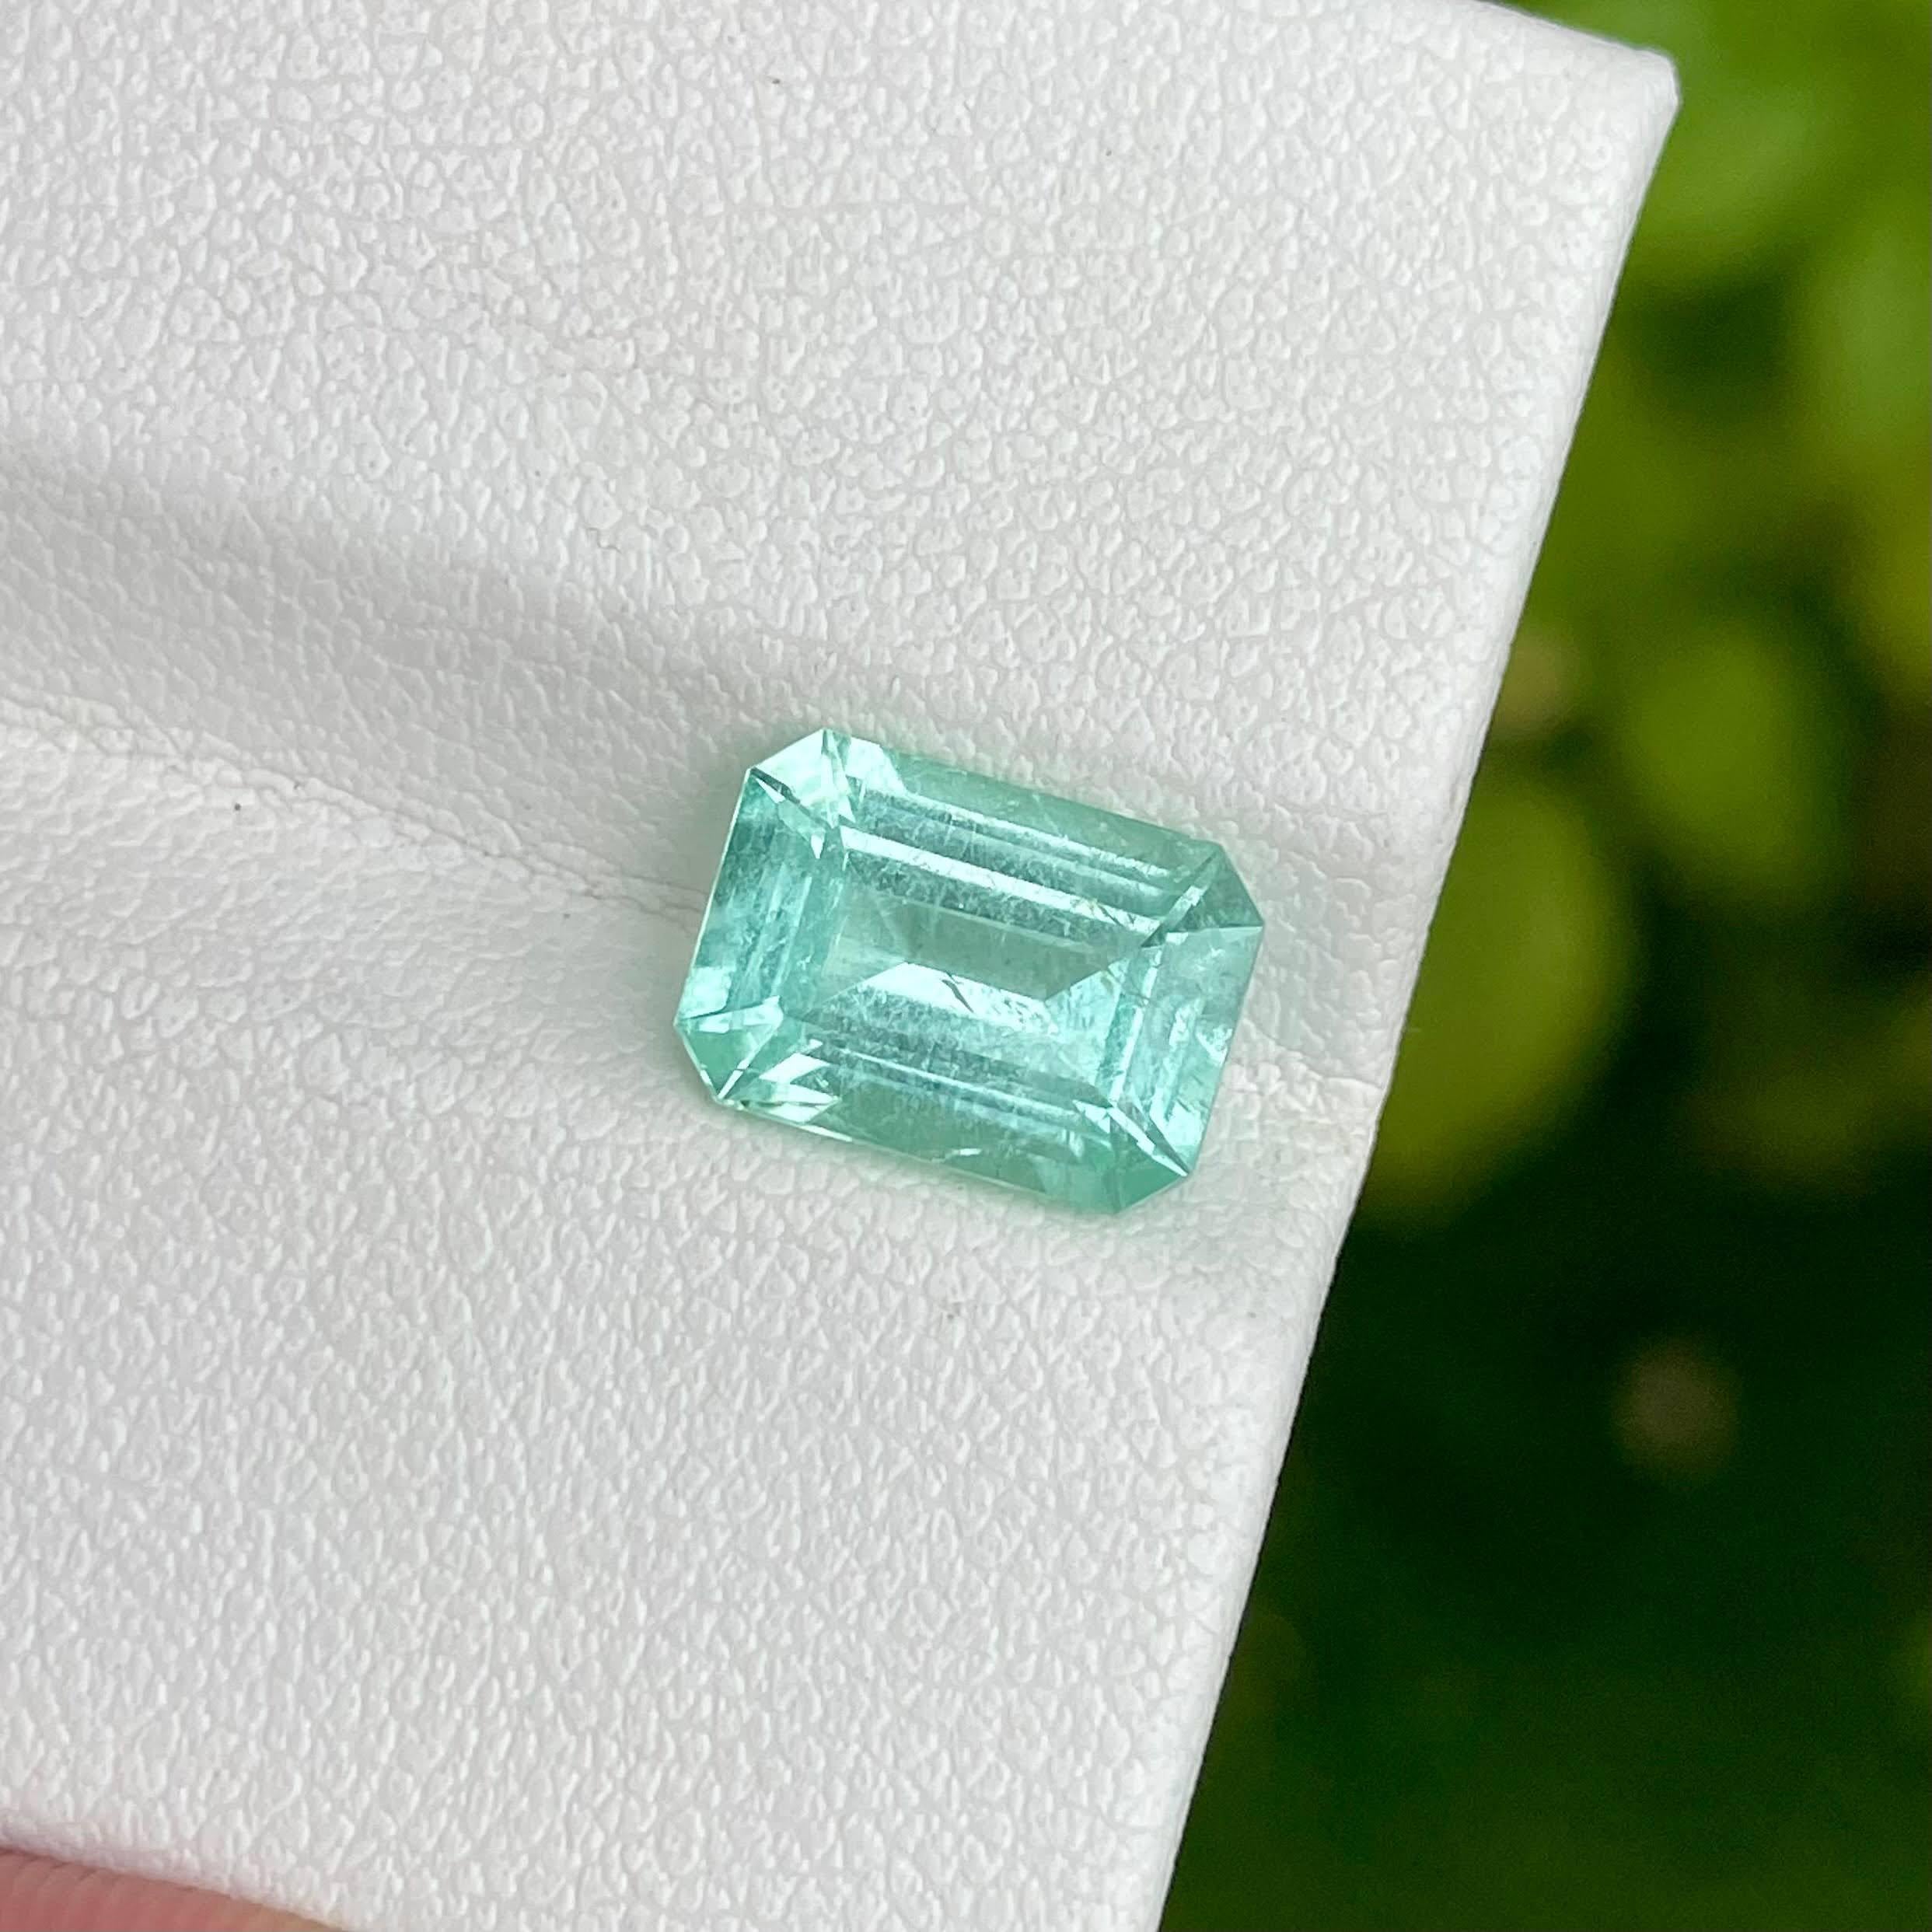 Women's or Men's 3.11 Carats Seafoam Loose Tourmaline Stone Emerald Cut Natural Afghan Gemstone For Sale